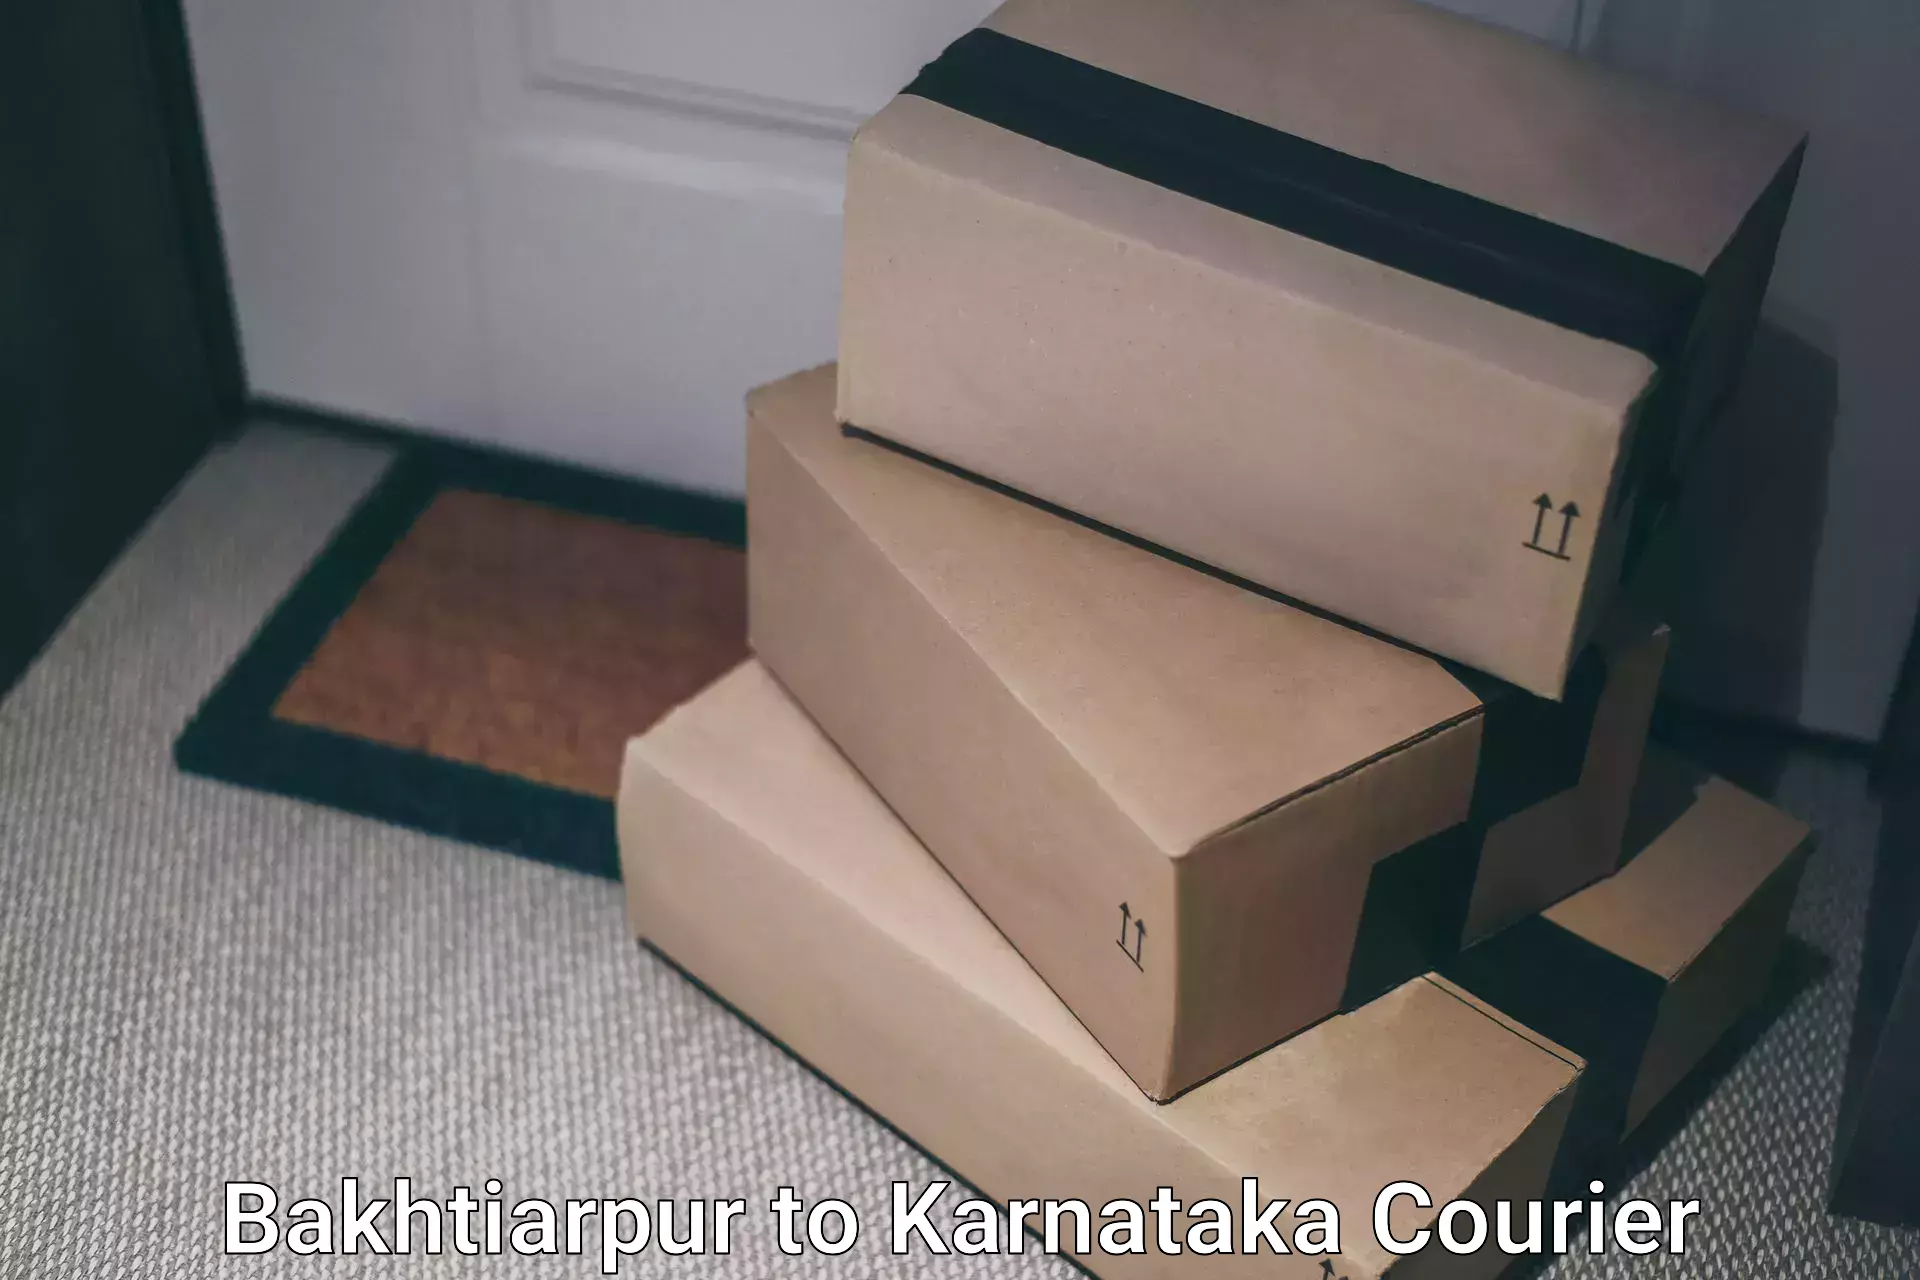 High-capacity parcel service Bakhtiarpur to Karnataka